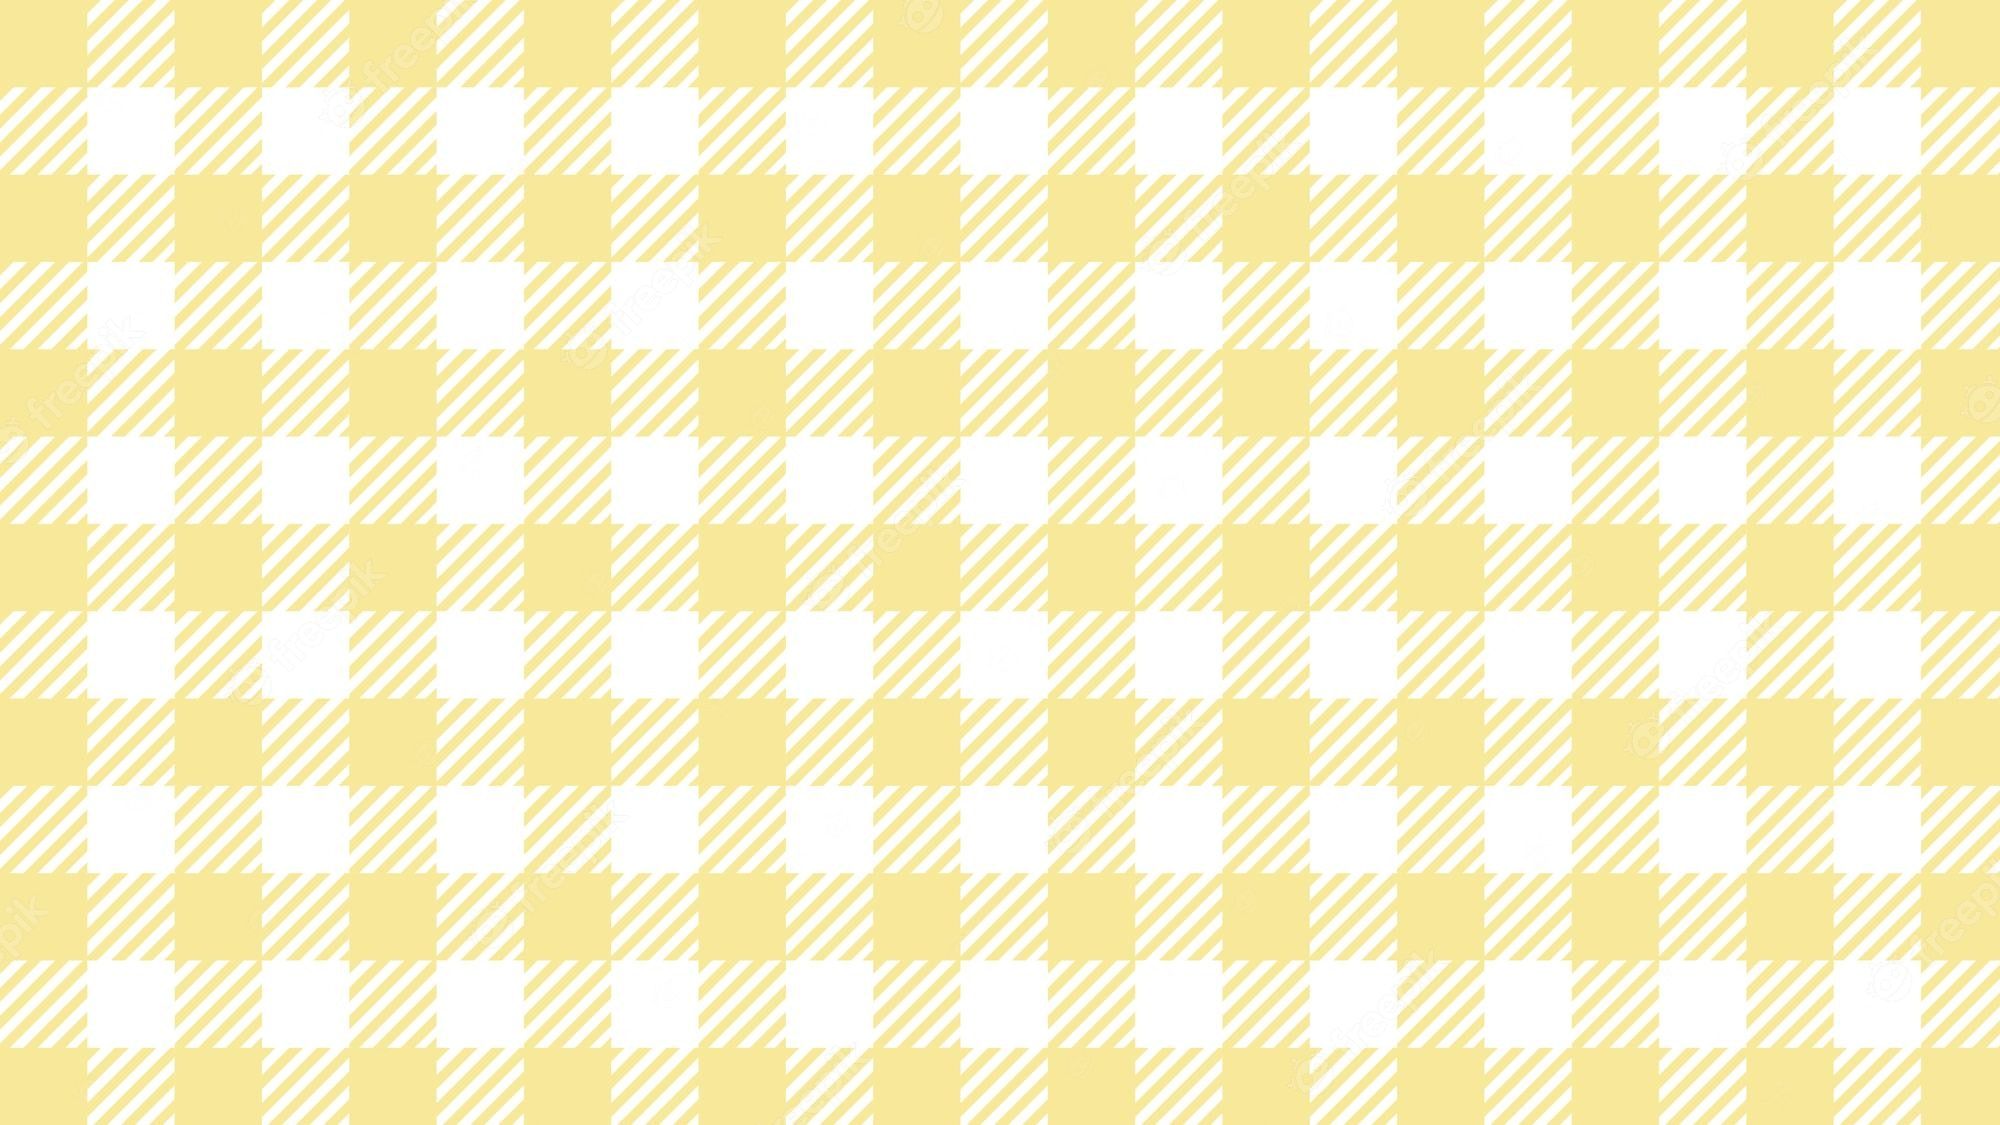 A yellow and white checkered pattern - Pastel yellow